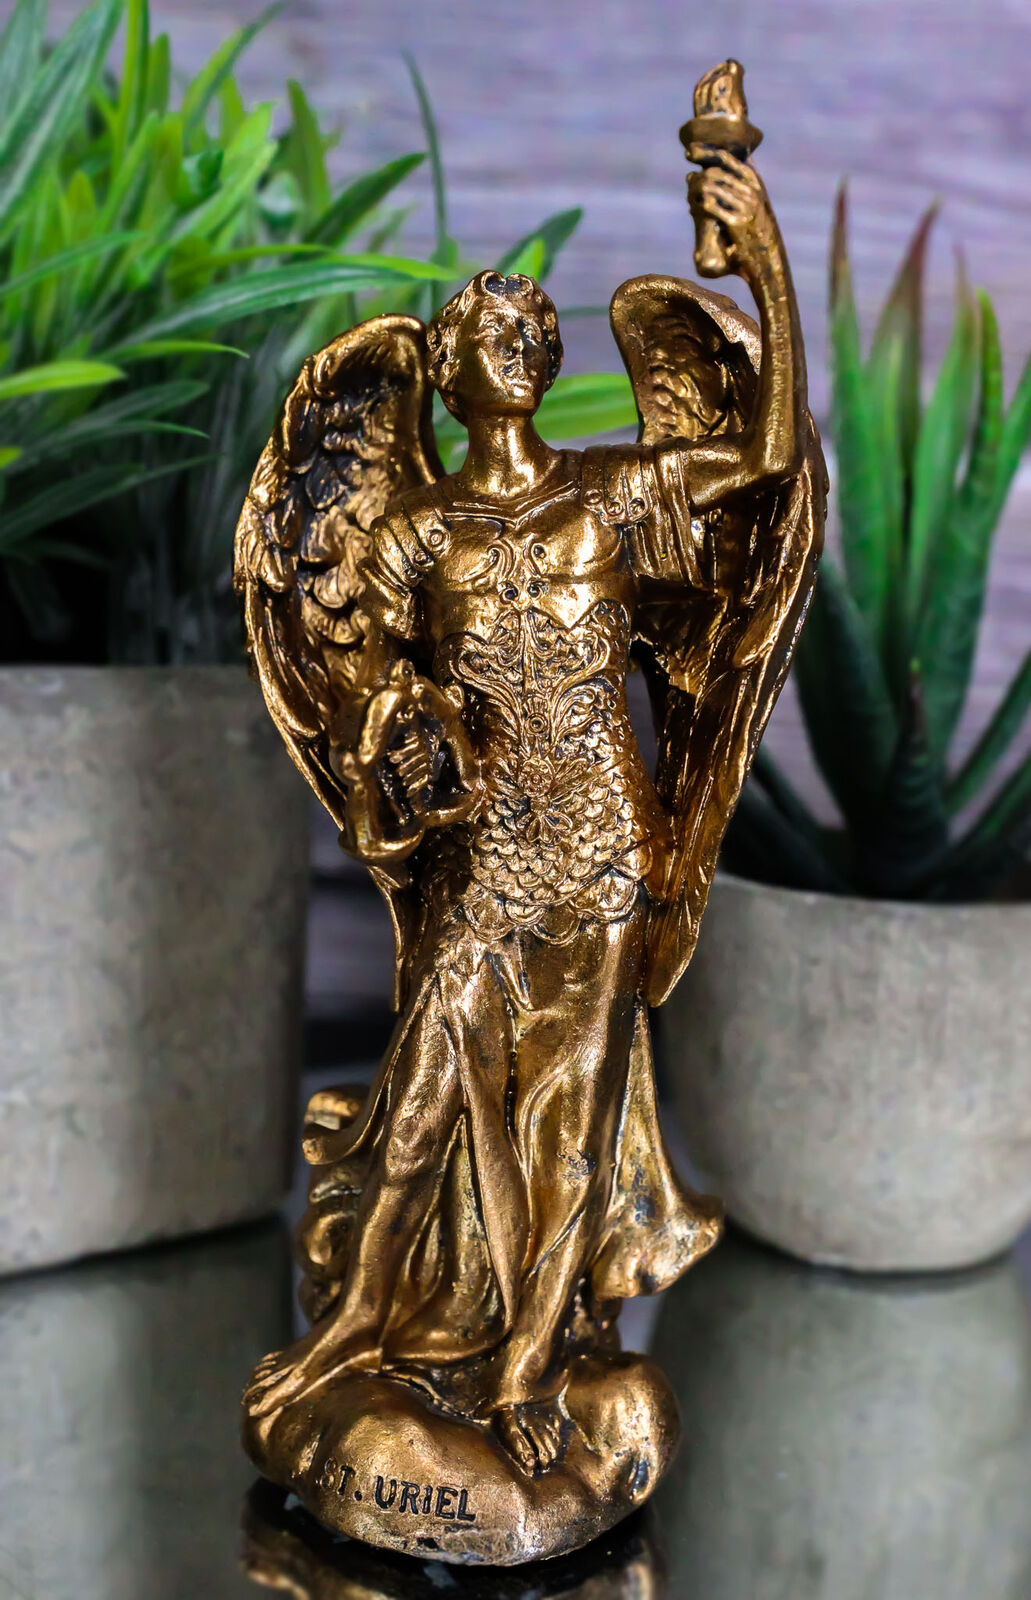 Bronzed Catholic Saint Uriel The Archangel Statue Patron of Ecology And Wisdom